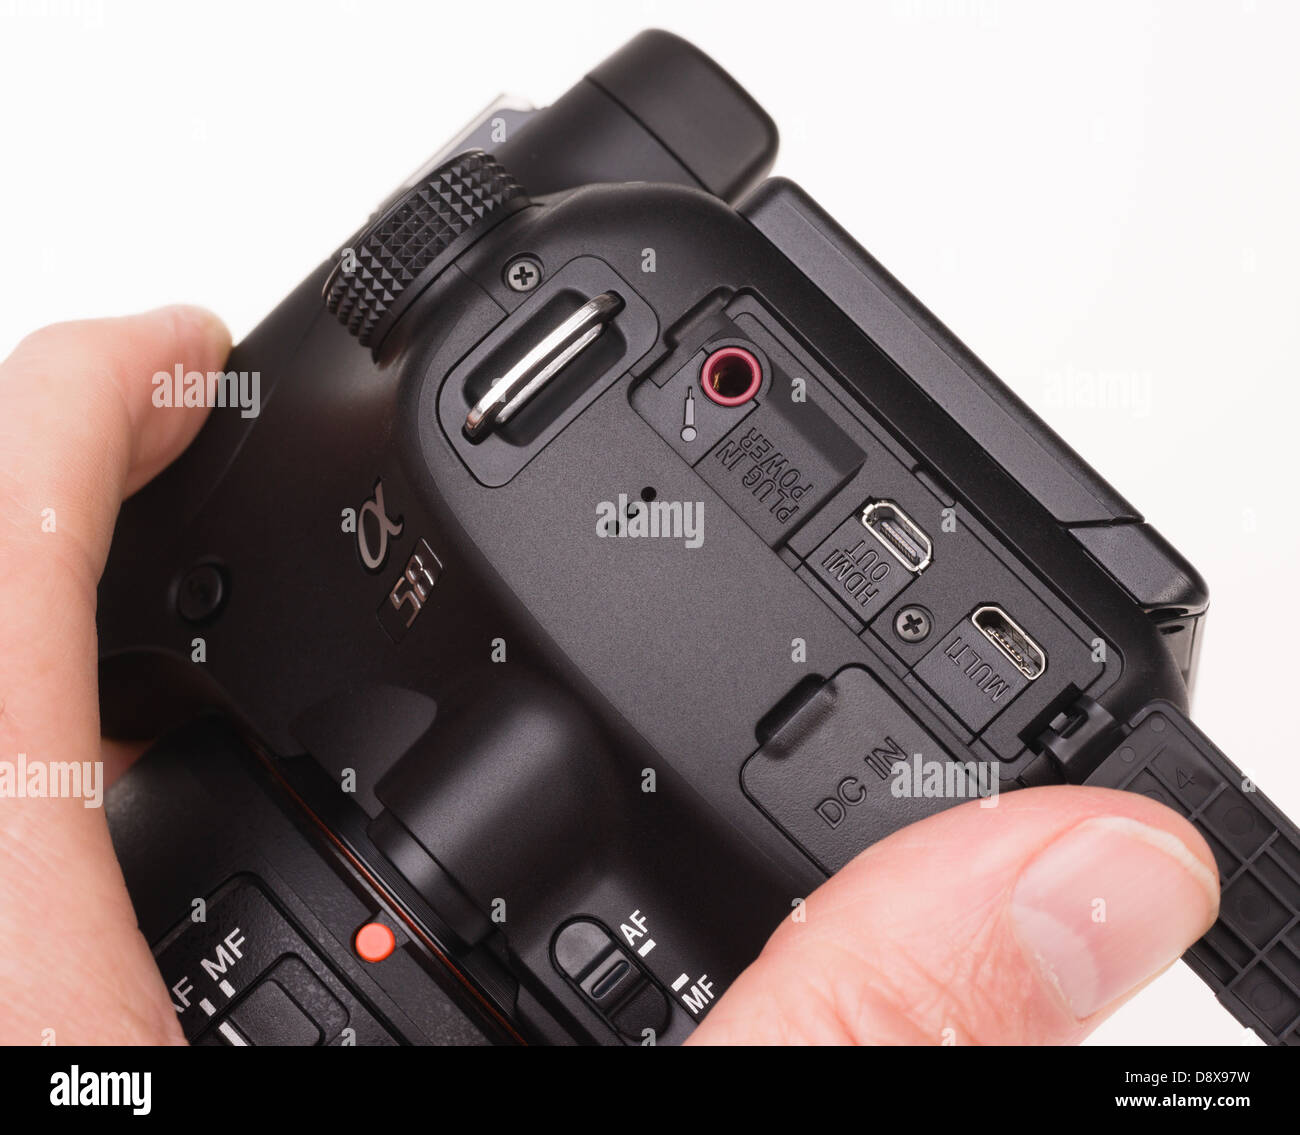 Sony Alpha 58 digital system camera - micro USB and HDMI interface, microphone socket. Stock Photo